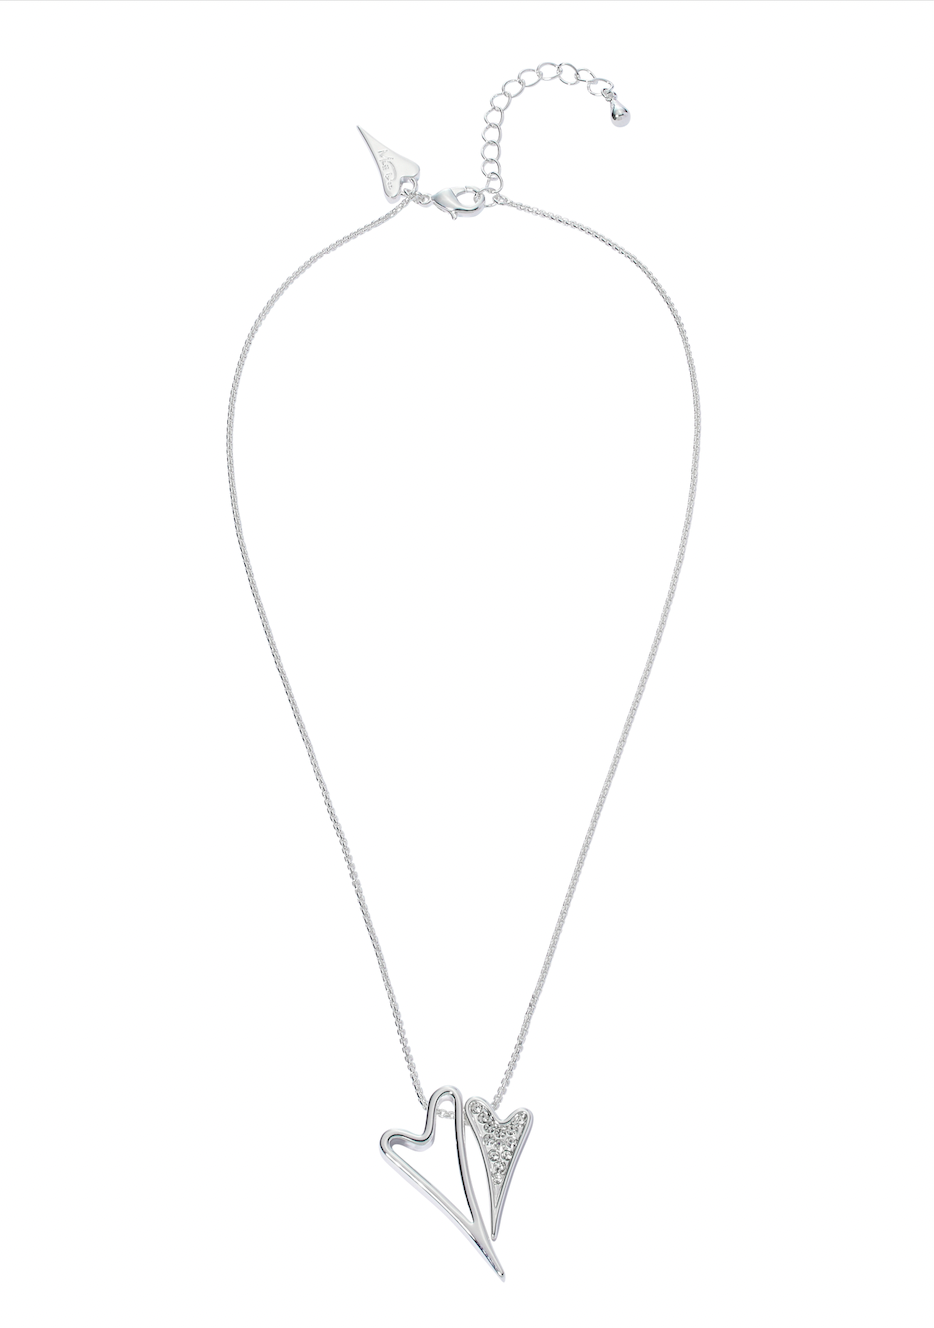 Necklace Silver with a hollow & diamante hearts pendant